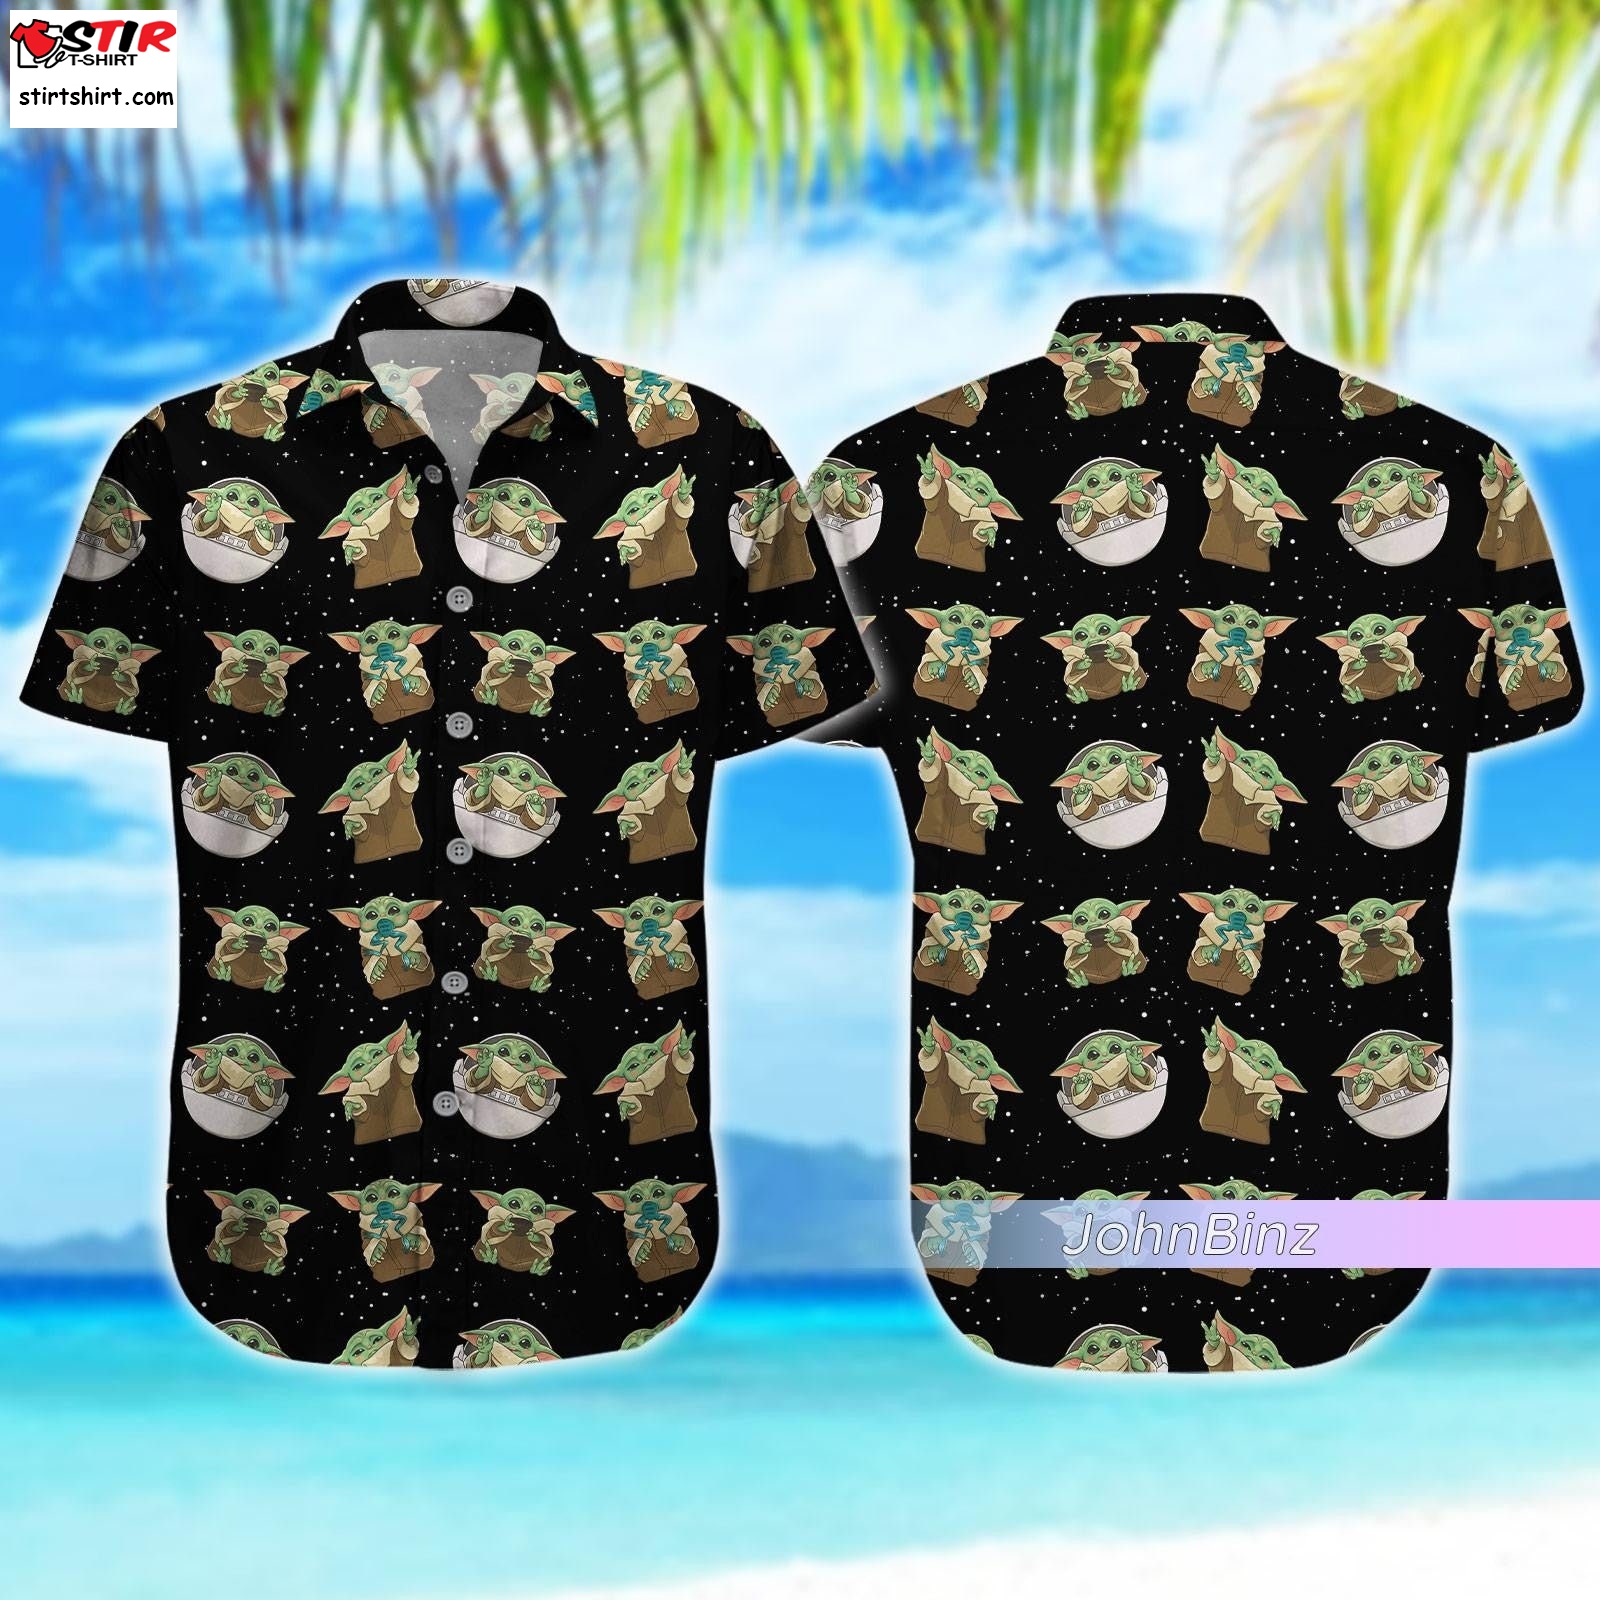 Baby Yoda Shirt, Star Wars The Mandalorian Hawaiian Shirt, Star Wars Button Down Shirt Black, Gifts For Yoda Lovers, Unisex S 5Xl Adult  Baby Yoda 